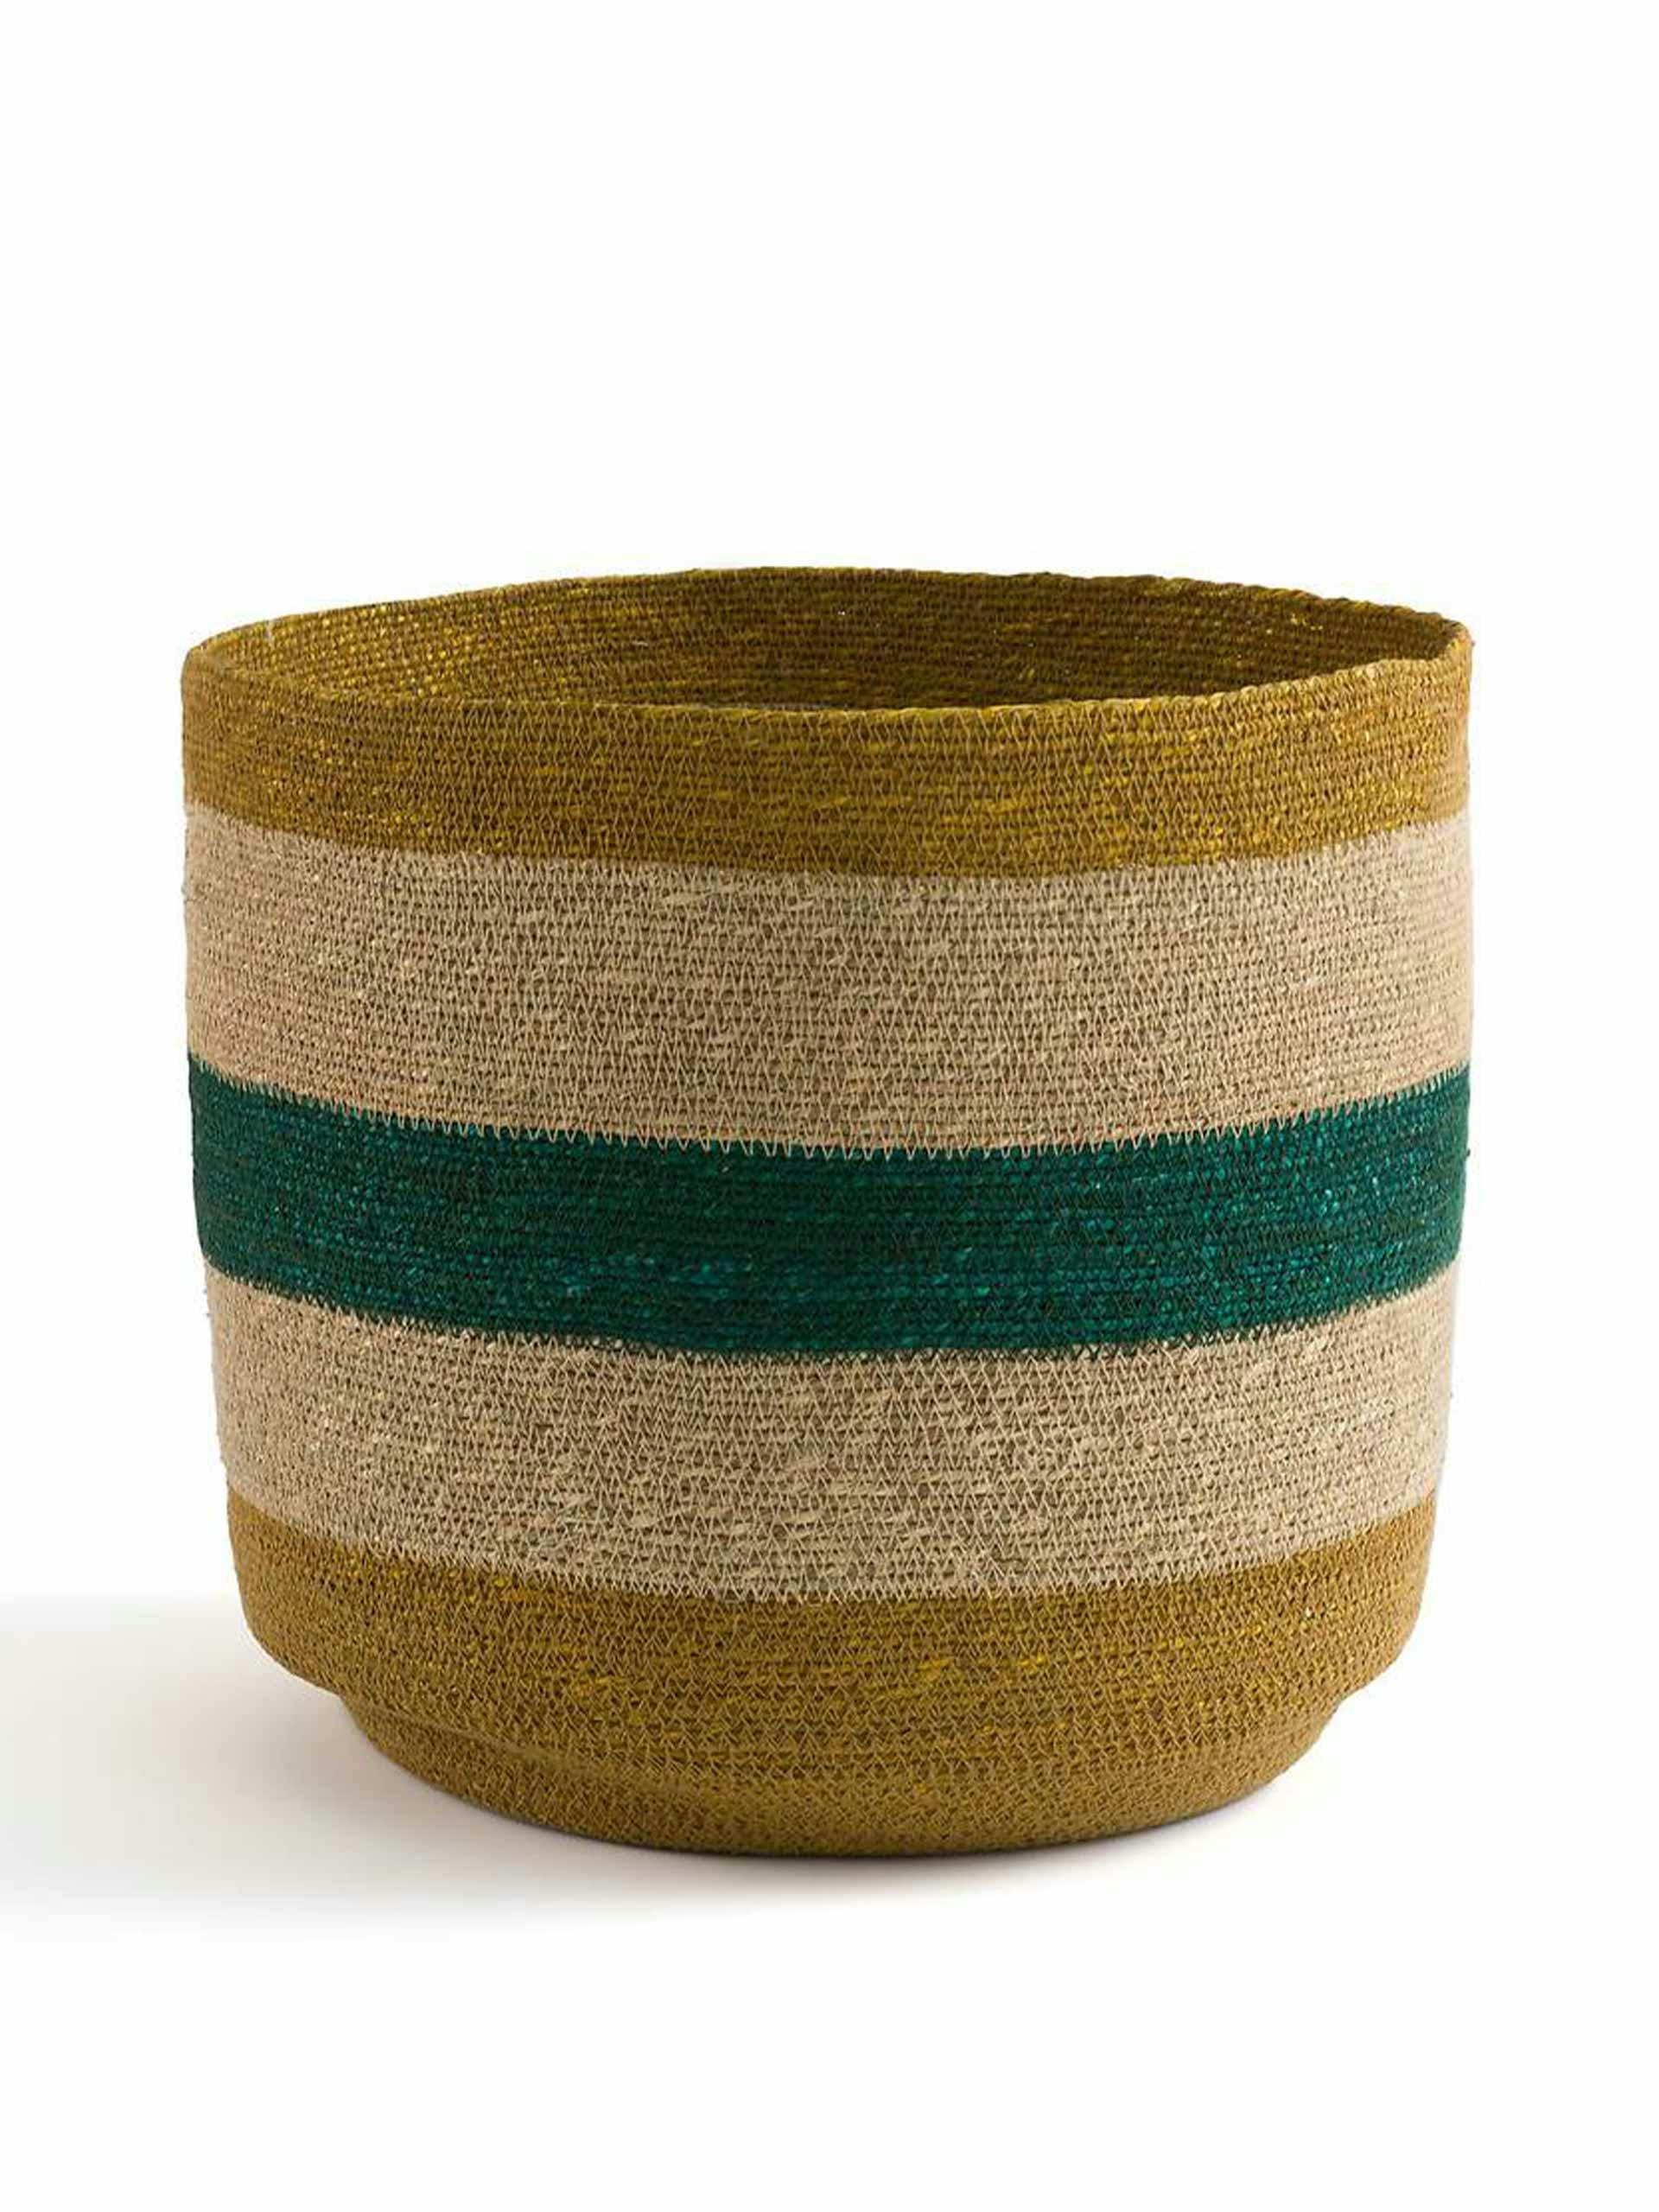 Mutilcoloured striped woven basket